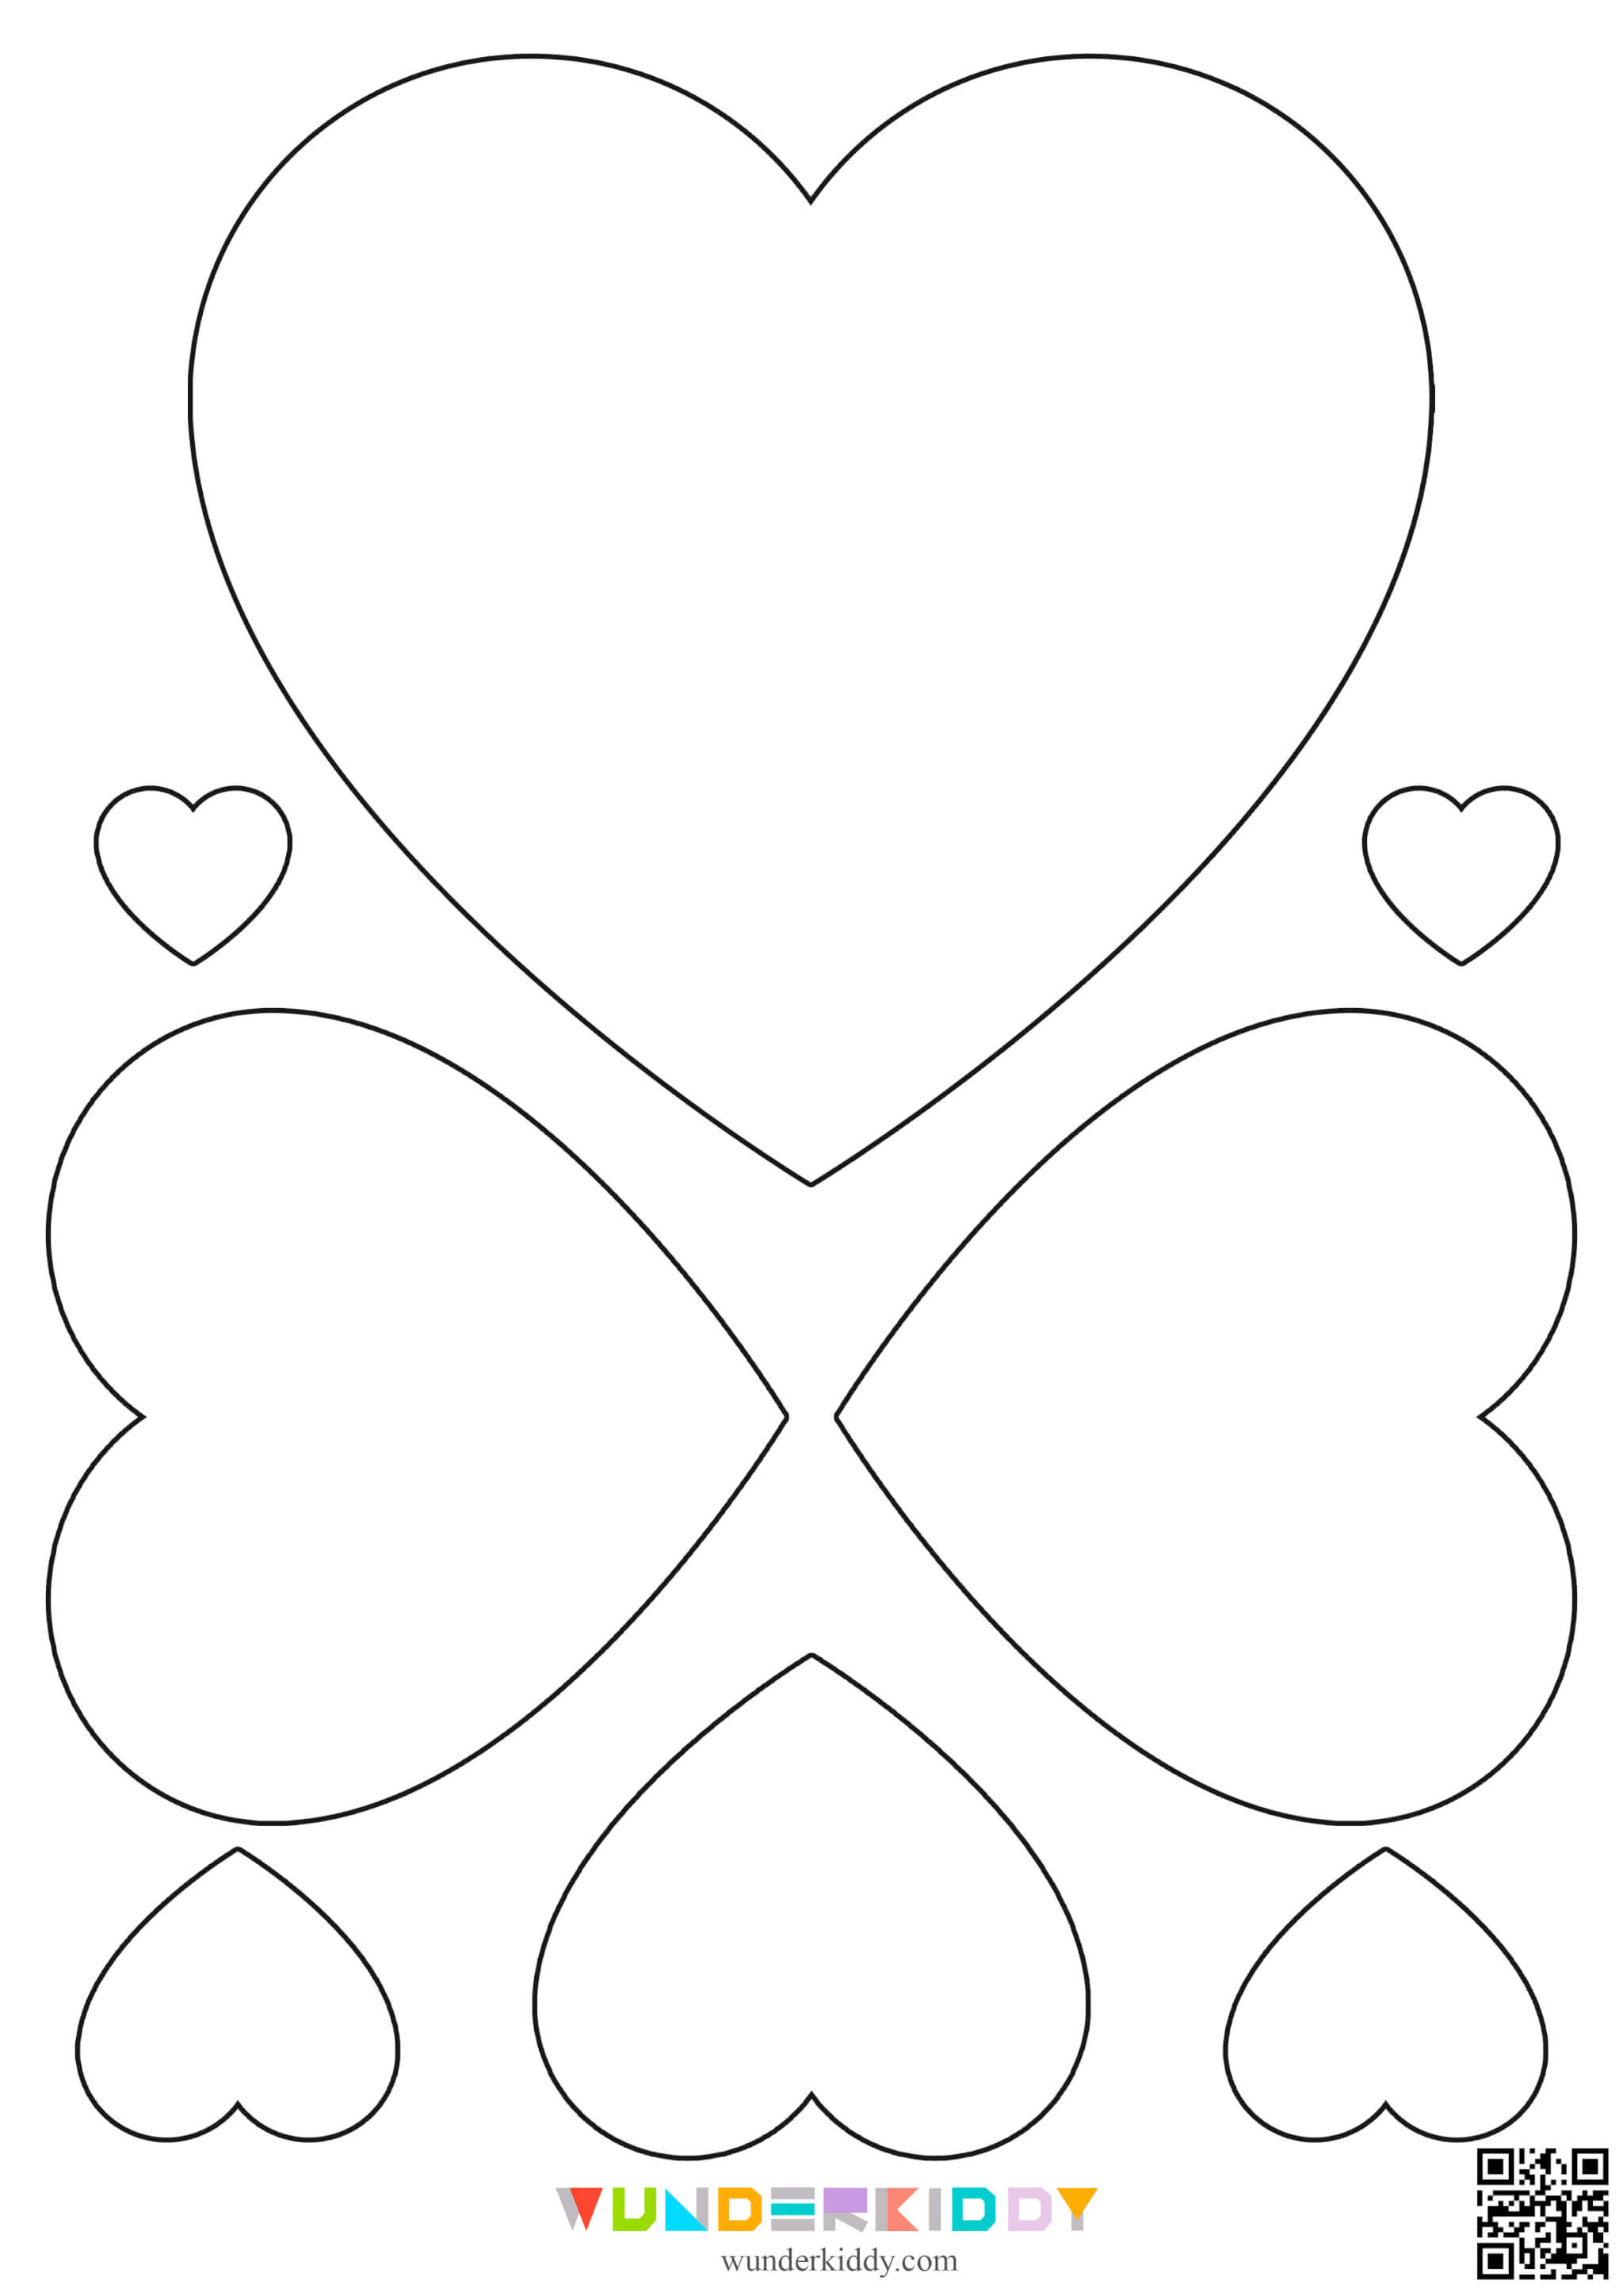 Heart Template Printable - Image 10